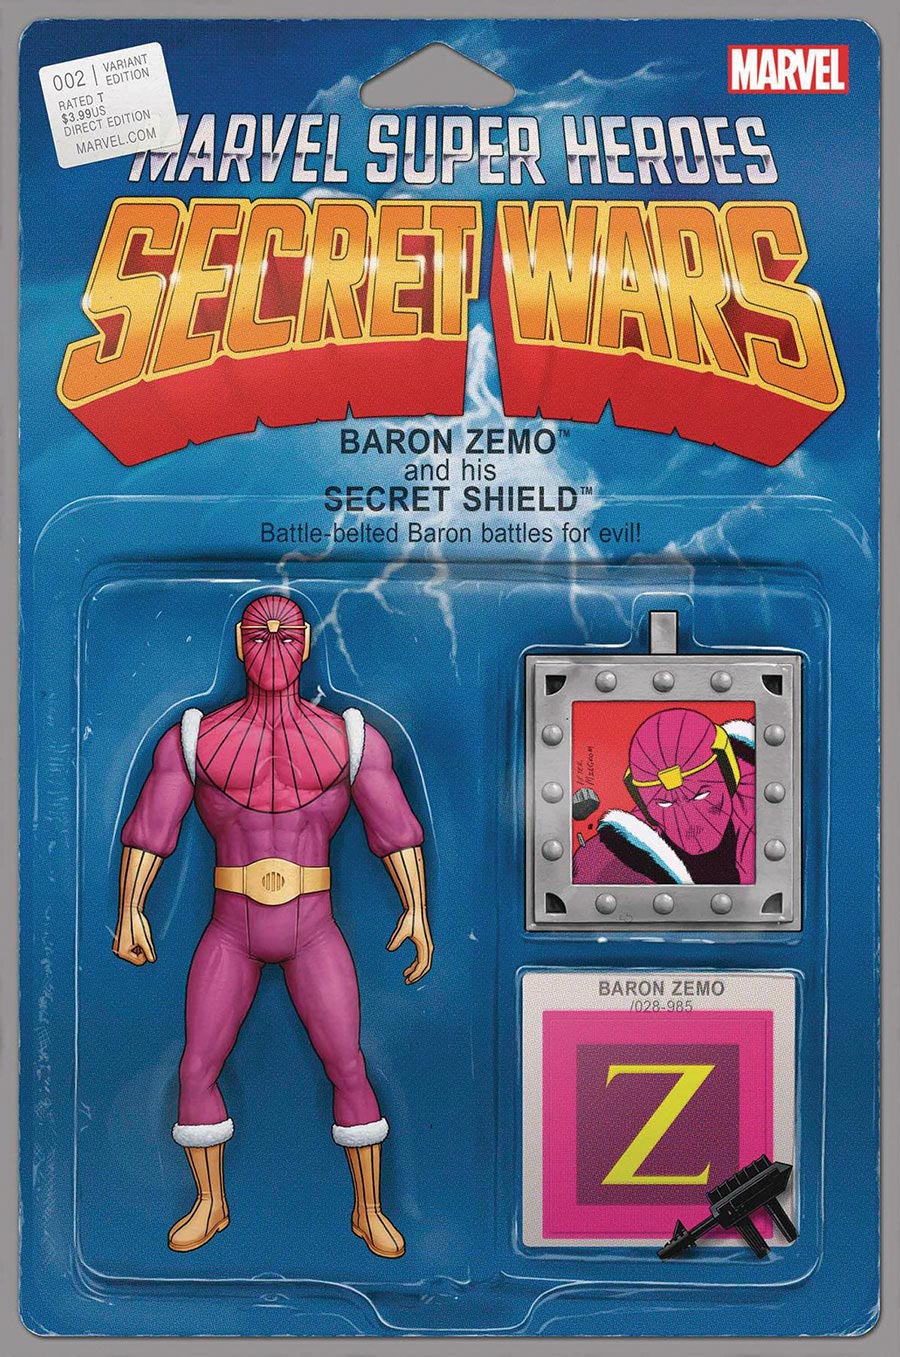 Marvel Super Heroes Secret Wars Battleworld #2 Cover F Variant John Tyler Christopher Action Figure Cover